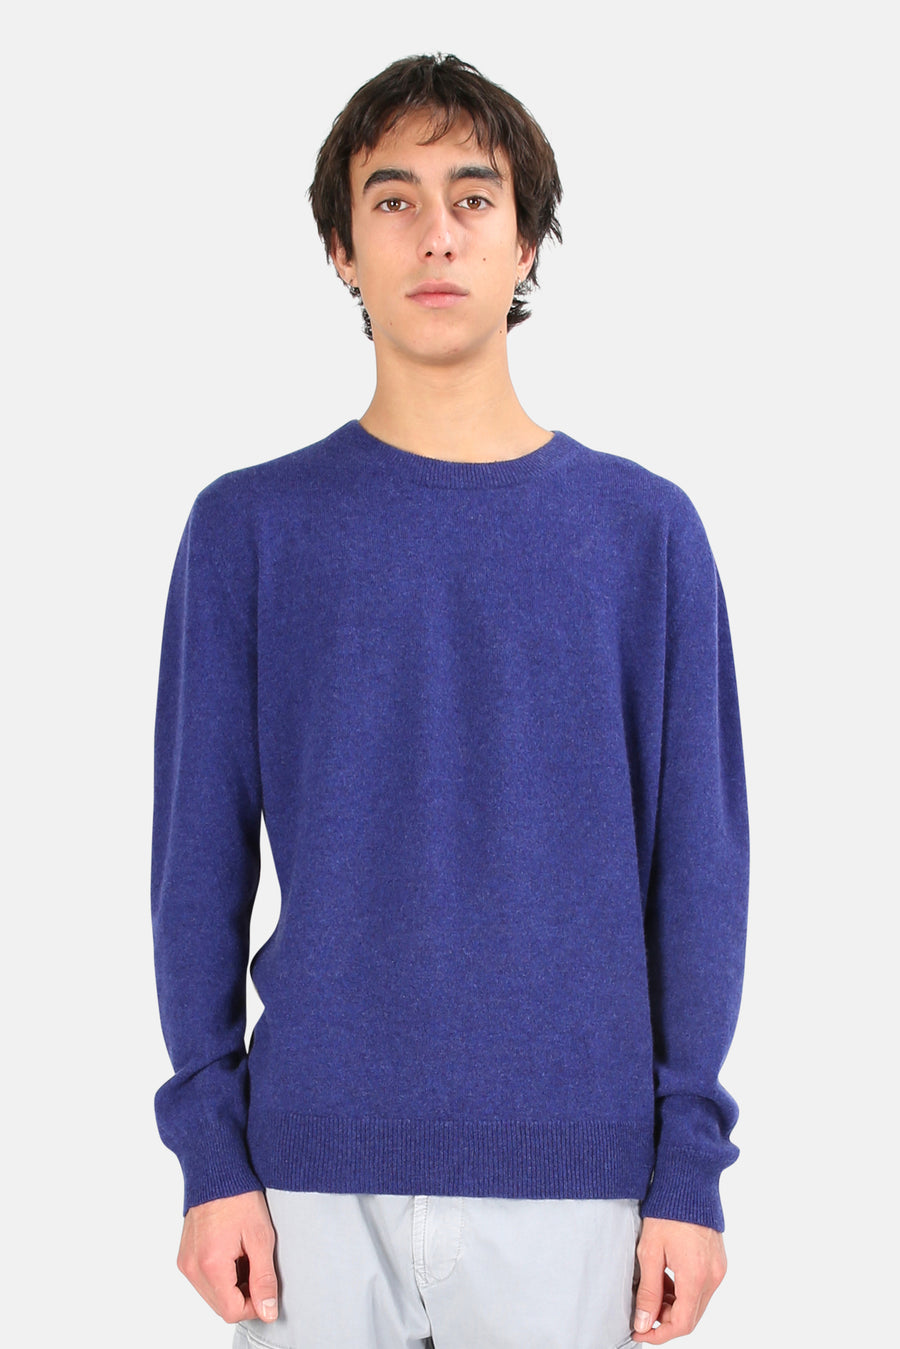 Two Tone Crewneck Cashmere Sweater Blue/White - blueandcream